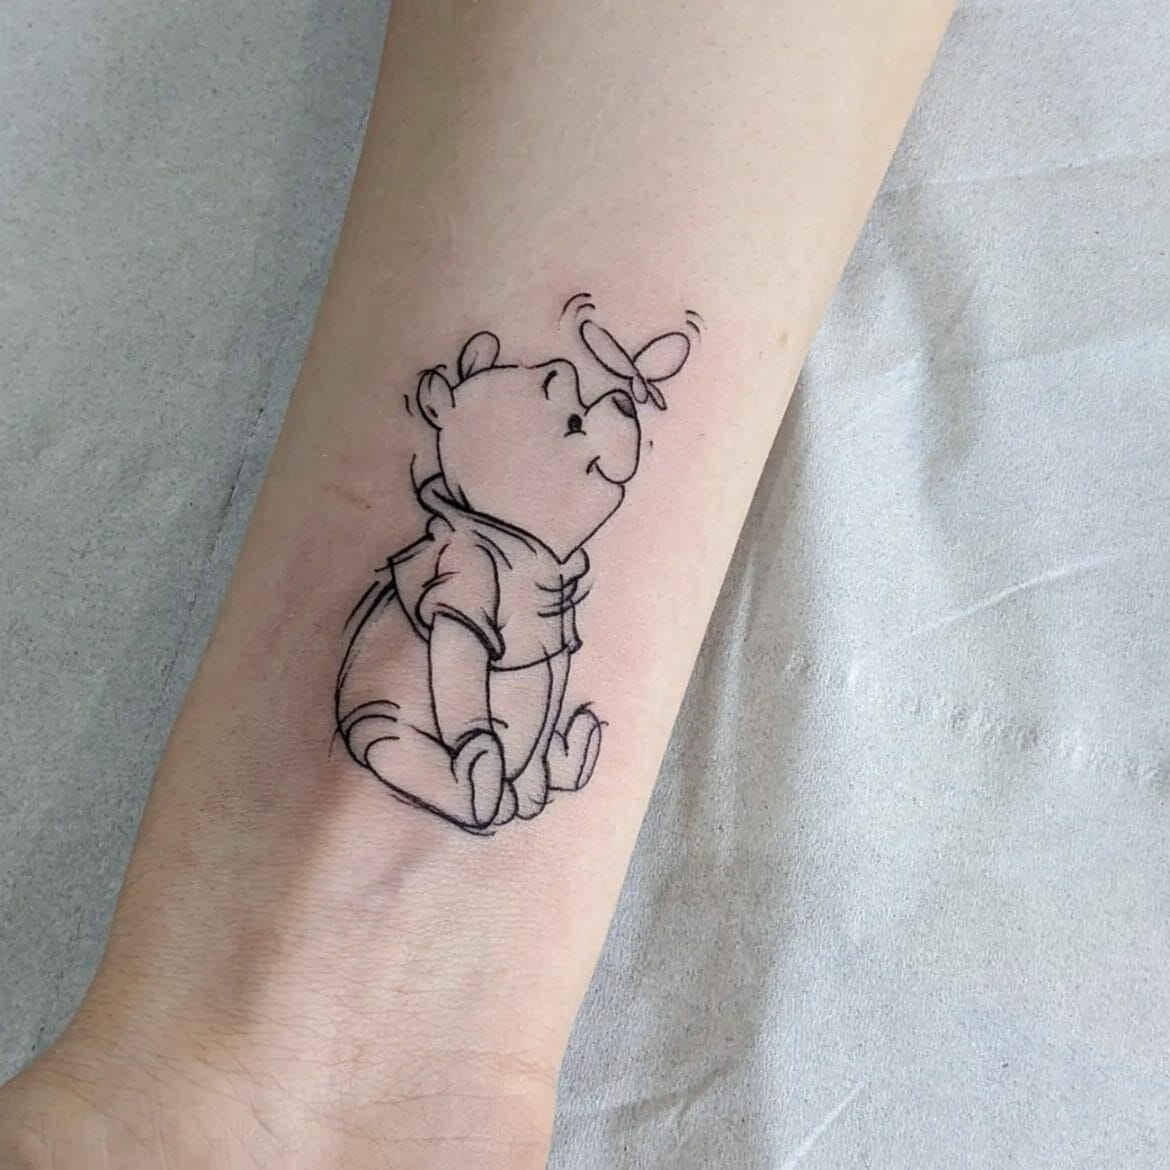 101 Best Poohbear Tattoo Ideas That Will Blow Your Mind!